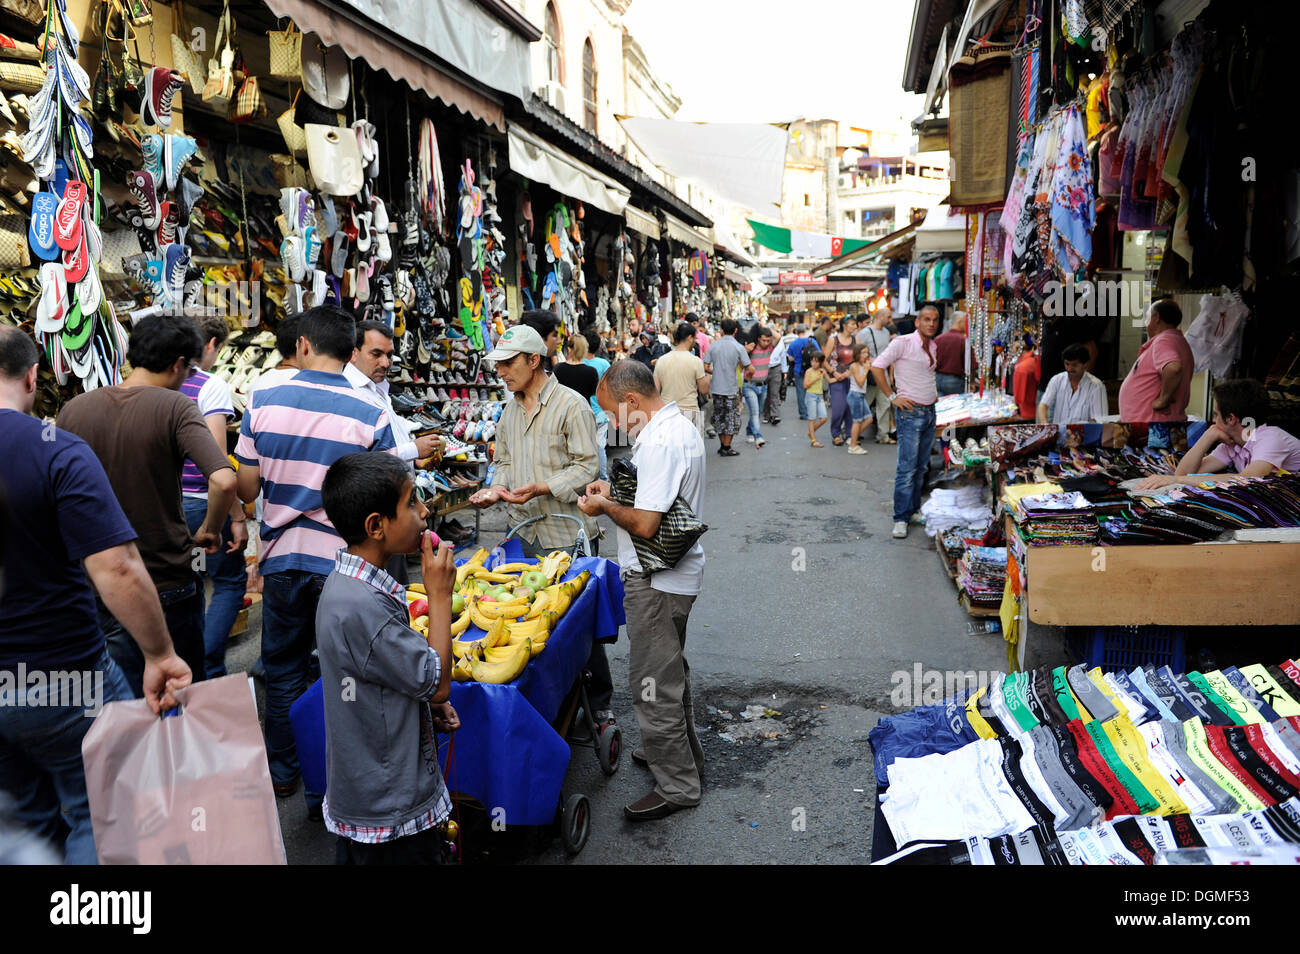 Bazaar quarter, Market Street at the Grand Bazaar, Kapali Carsi, Istanbul, Turkey Stock Photo